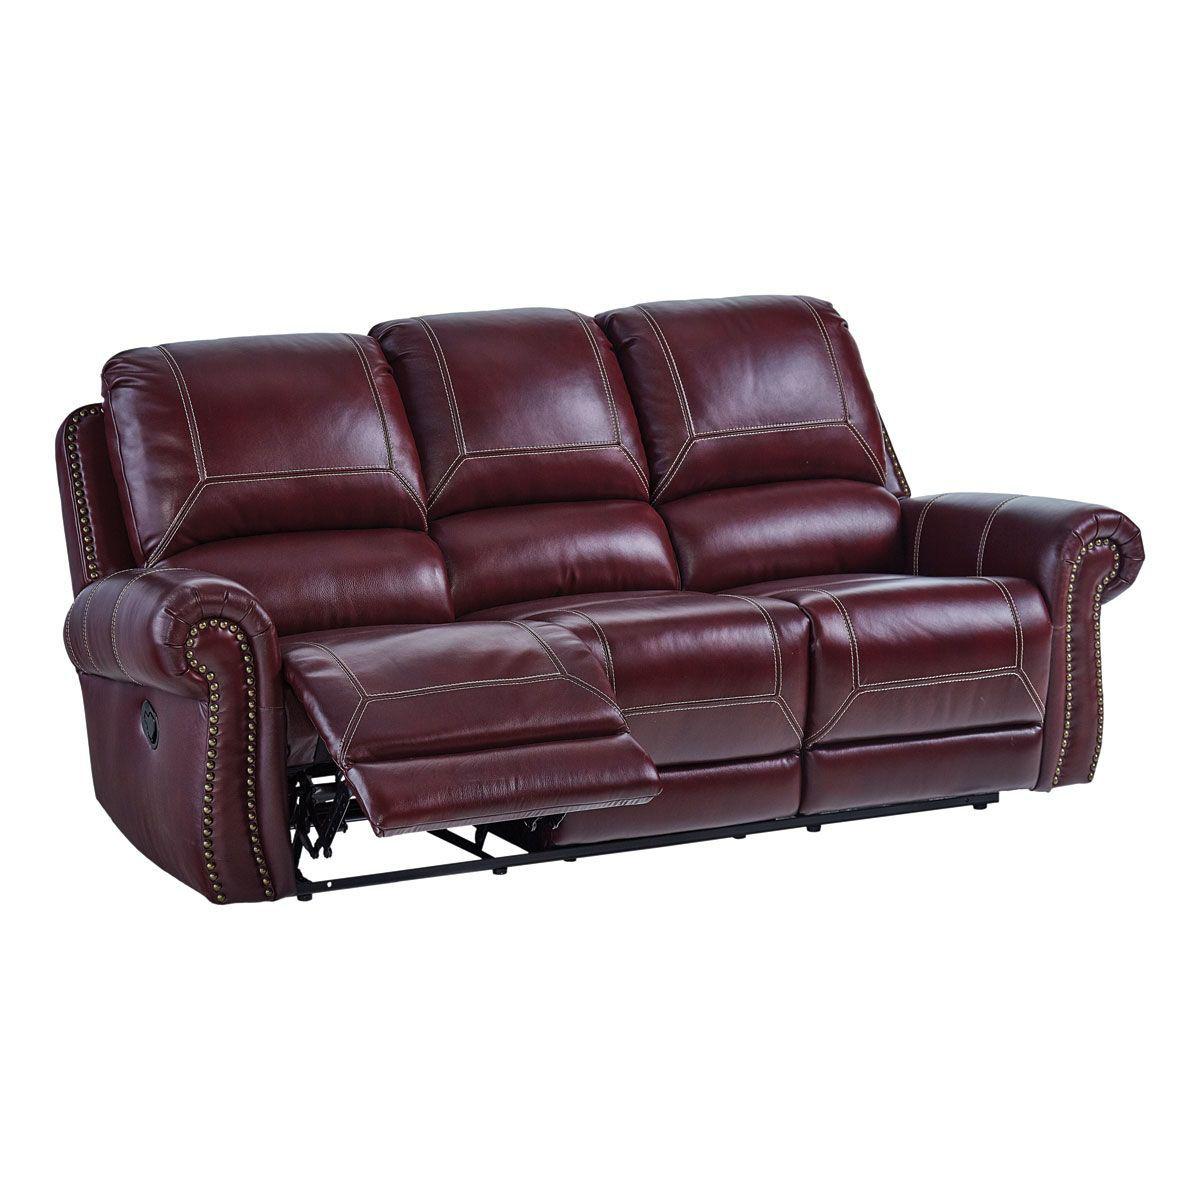 https://www.badcock.com/images/thumbs/0037510_duchess-leather-manual-reclining-sofa.jpeg